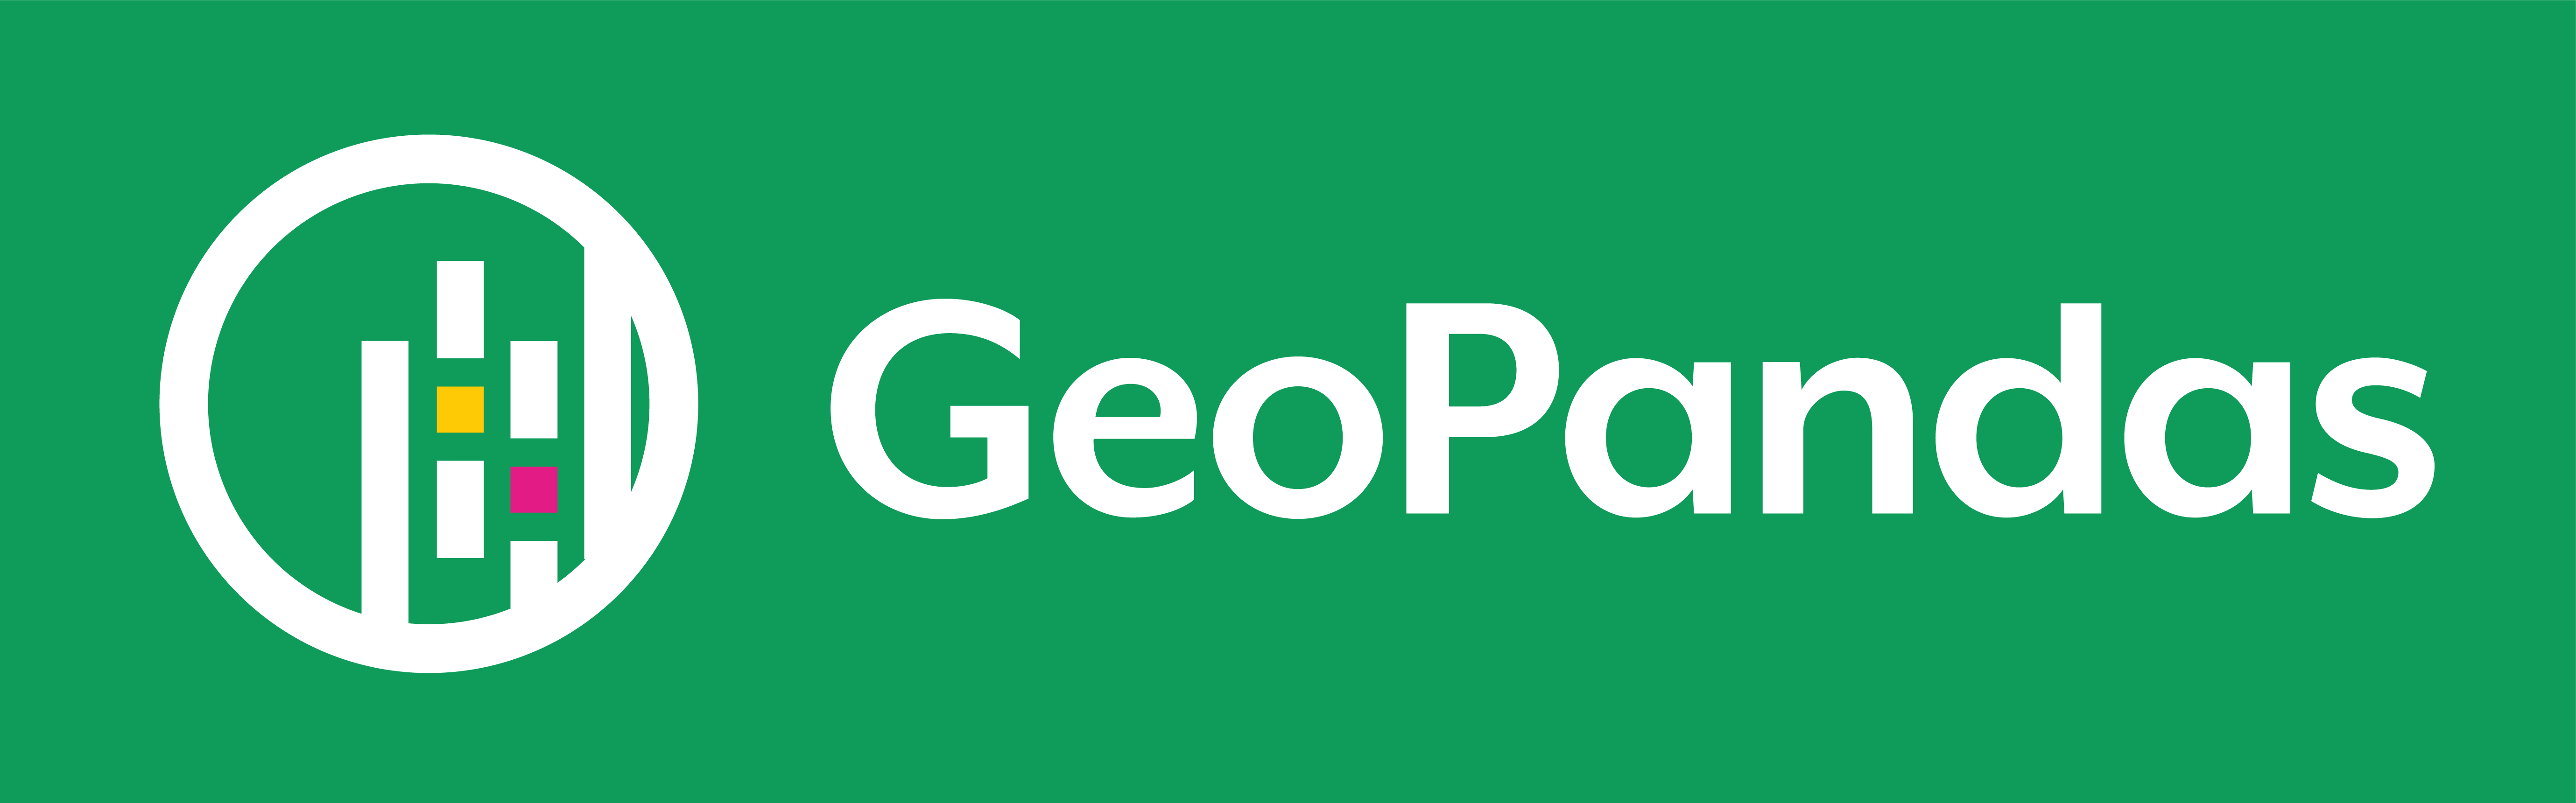 geopandas-logo-green